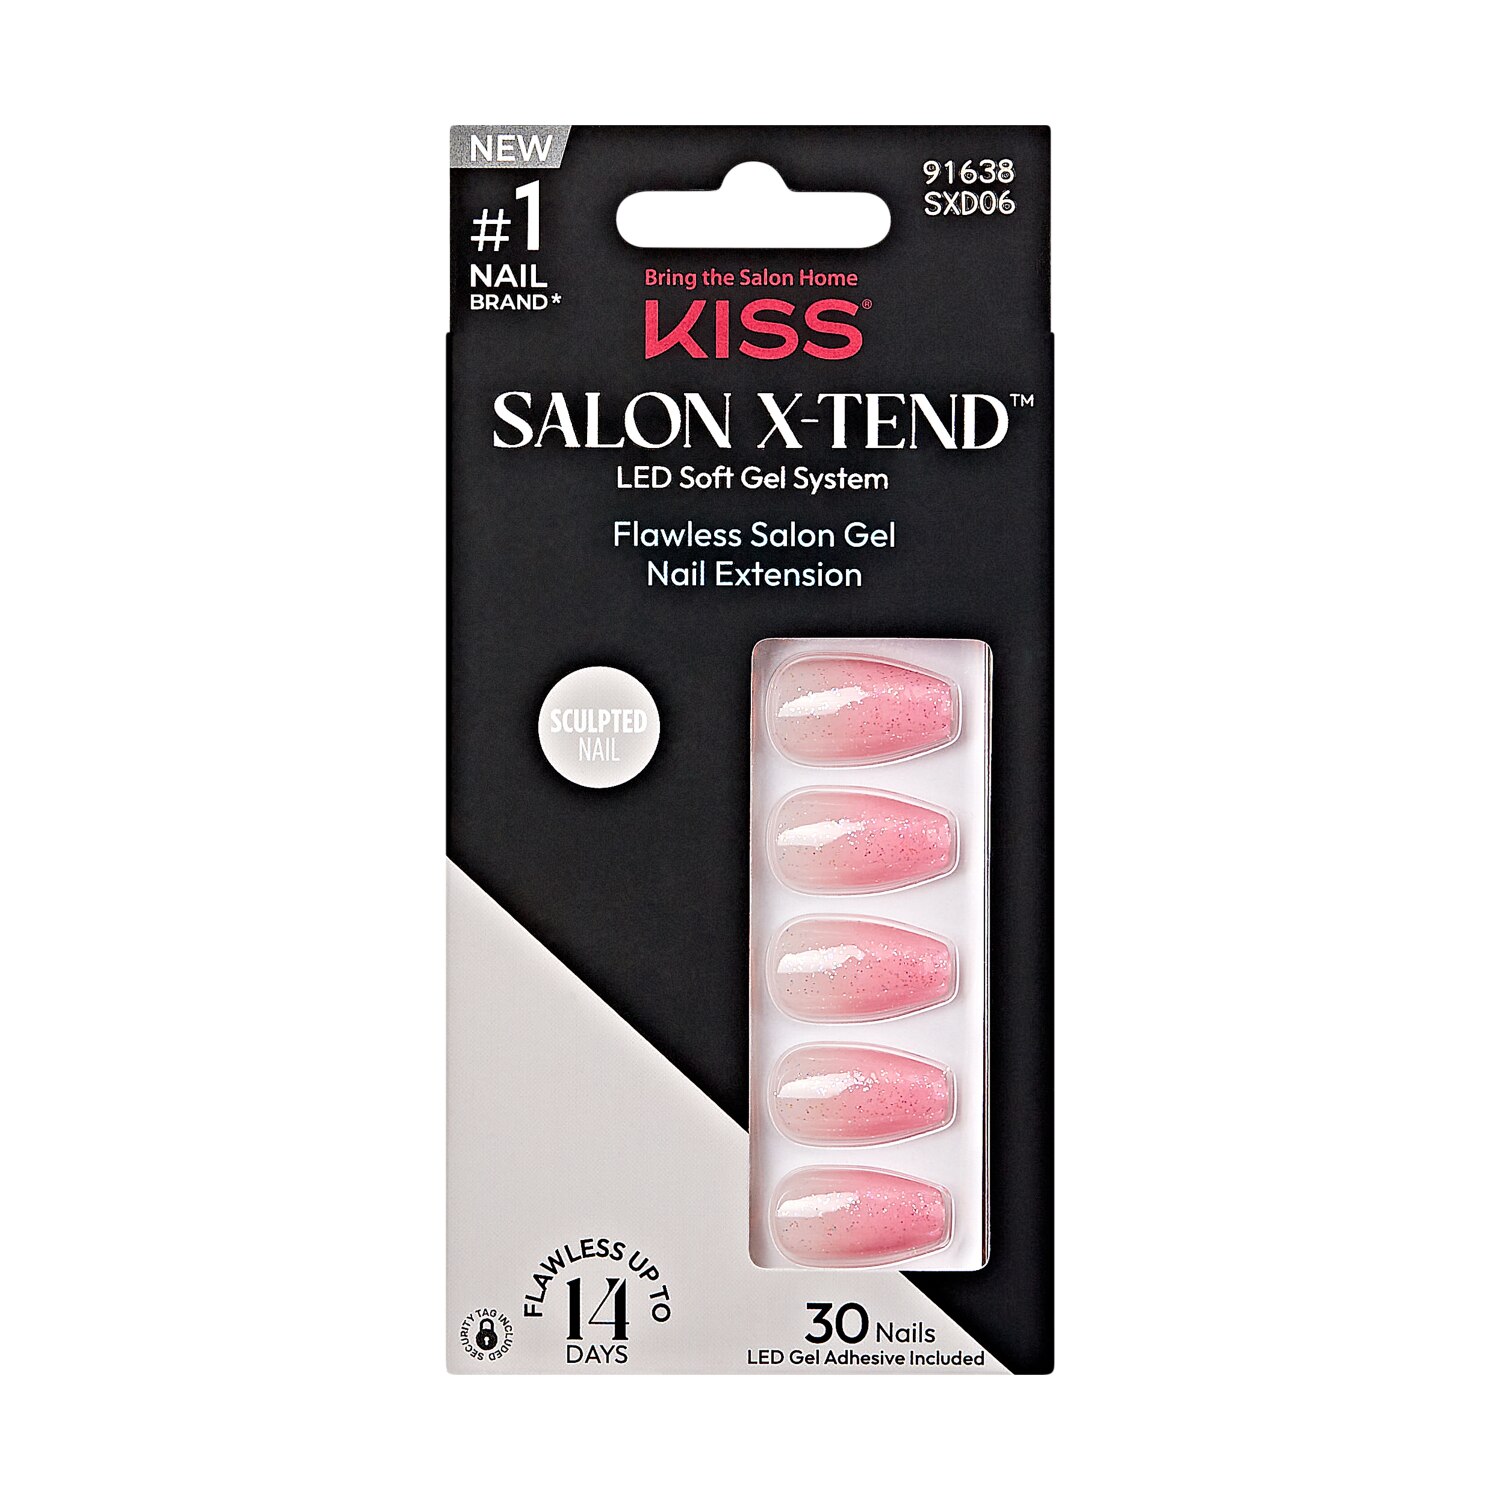 KISS Salon X-tend Nails, Detox , CVS